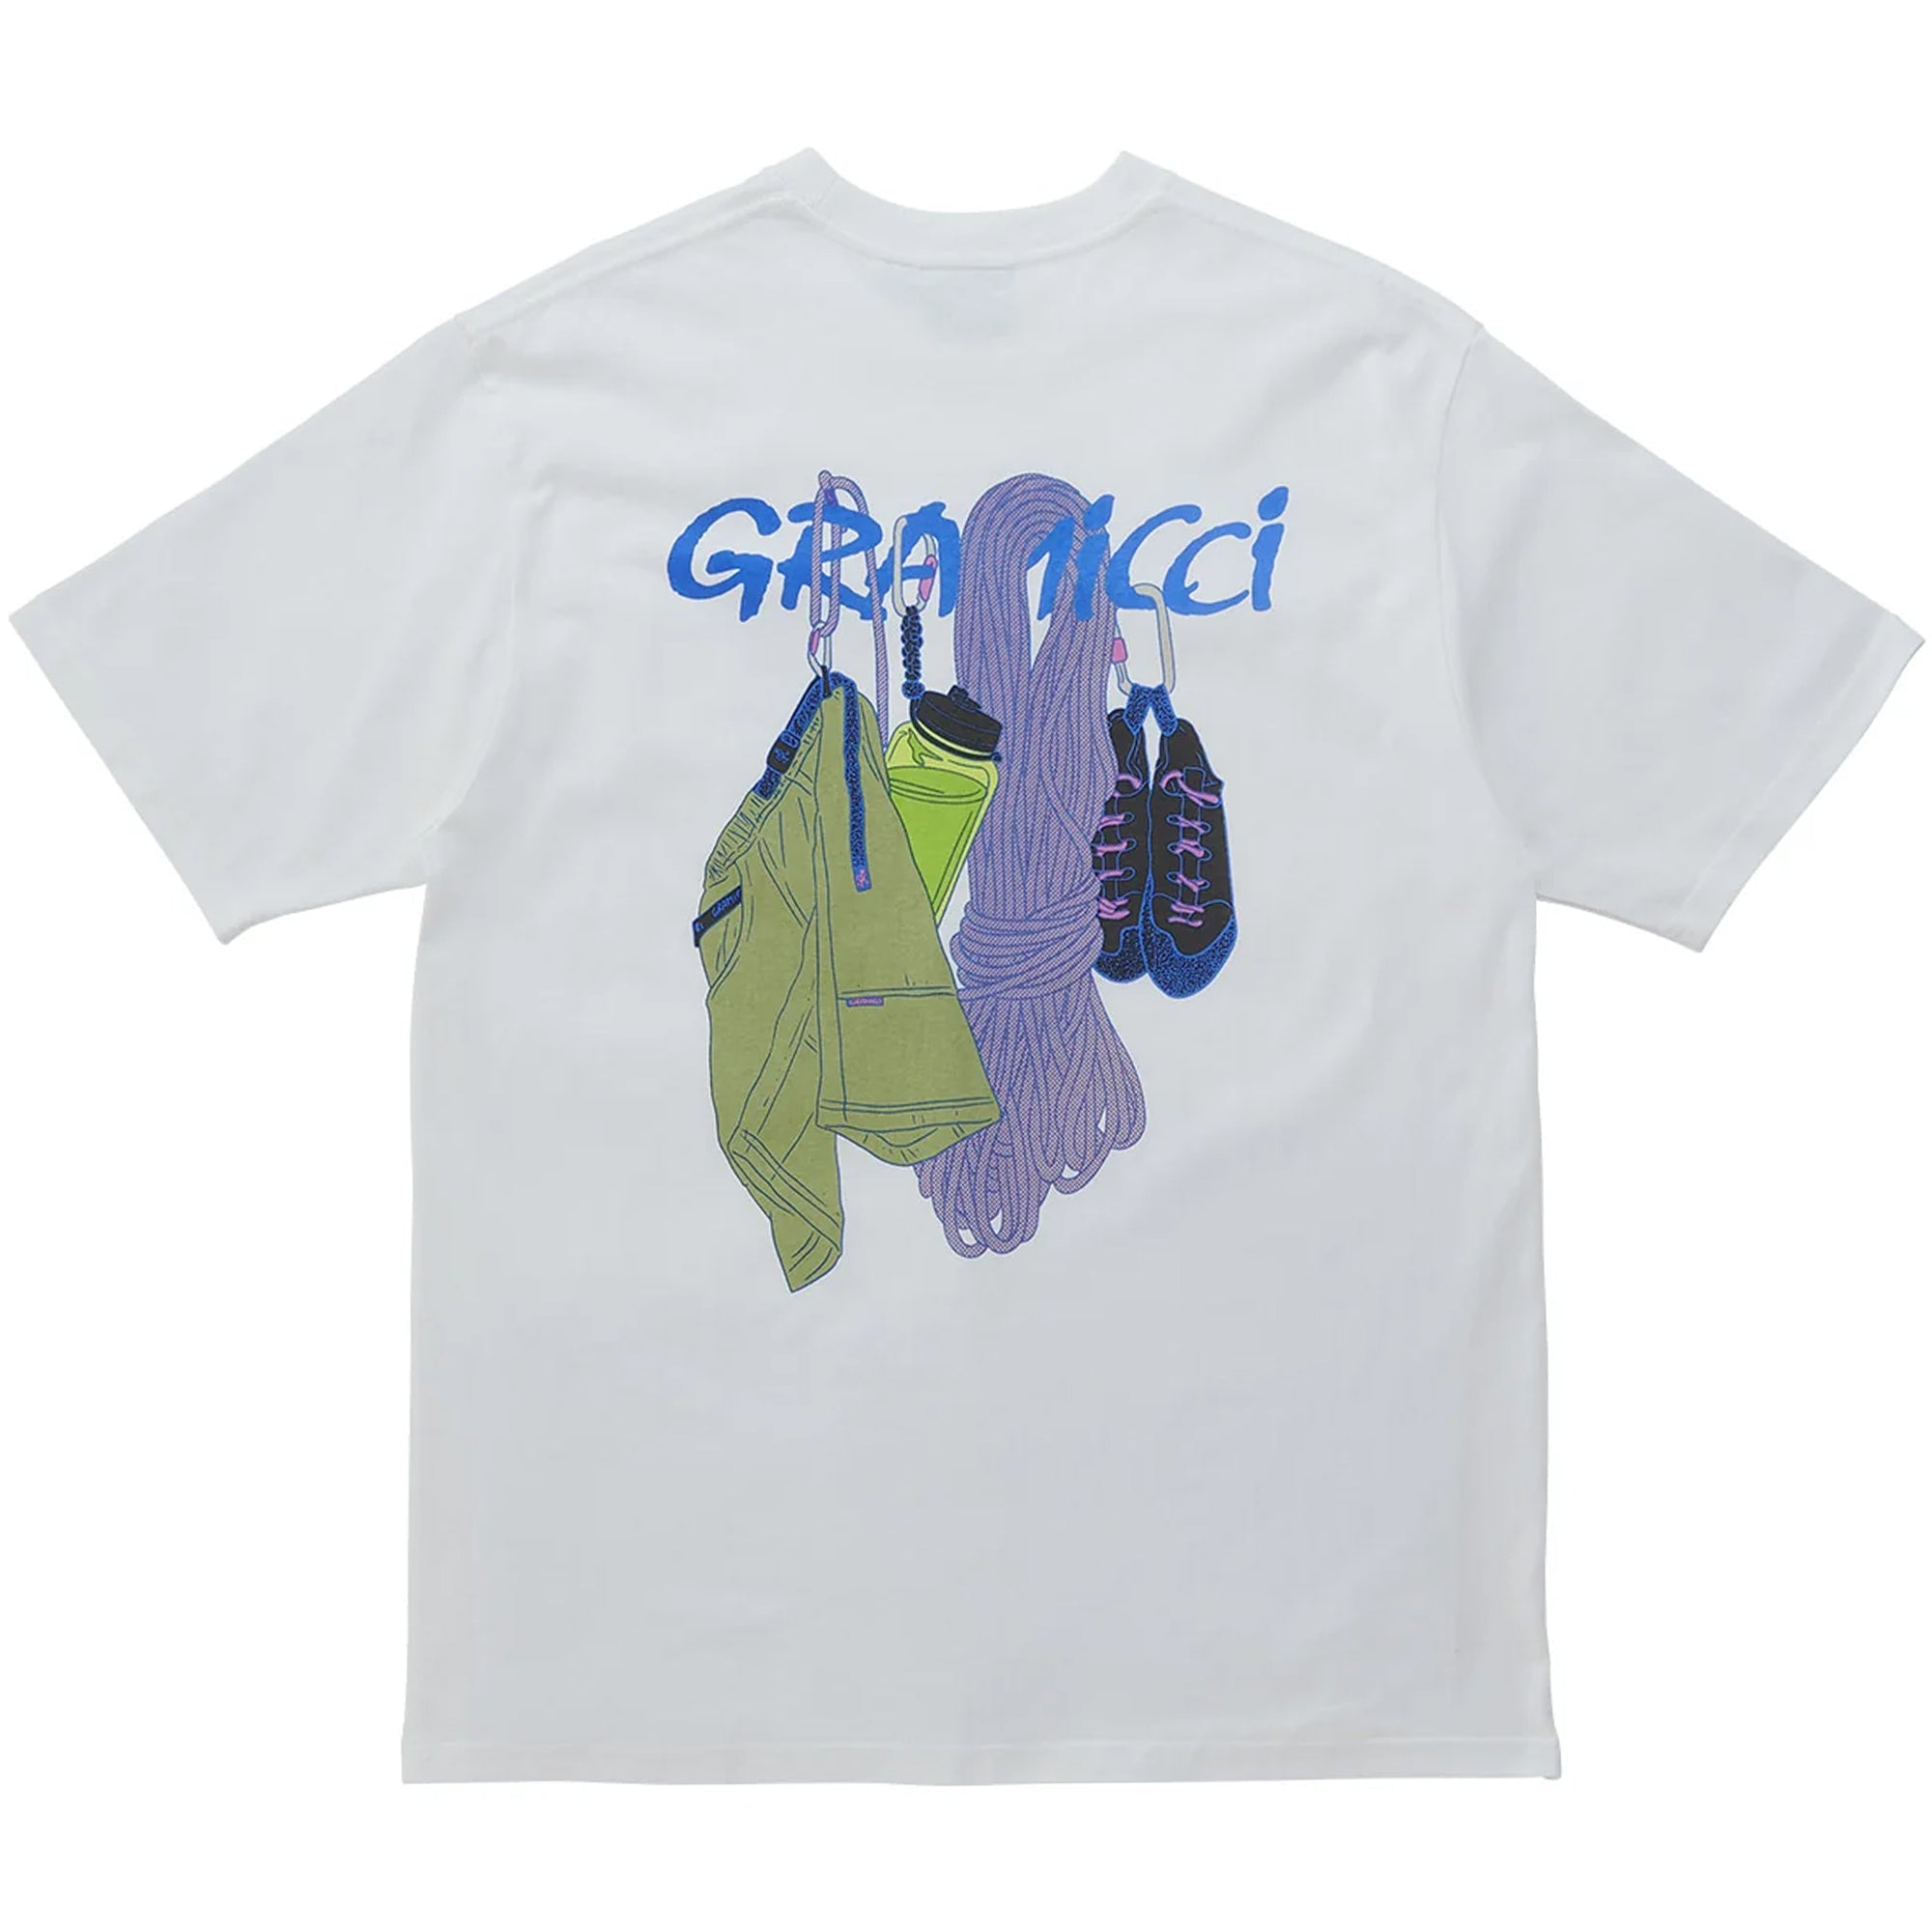 Gramicci Equipped T-Shirt - White